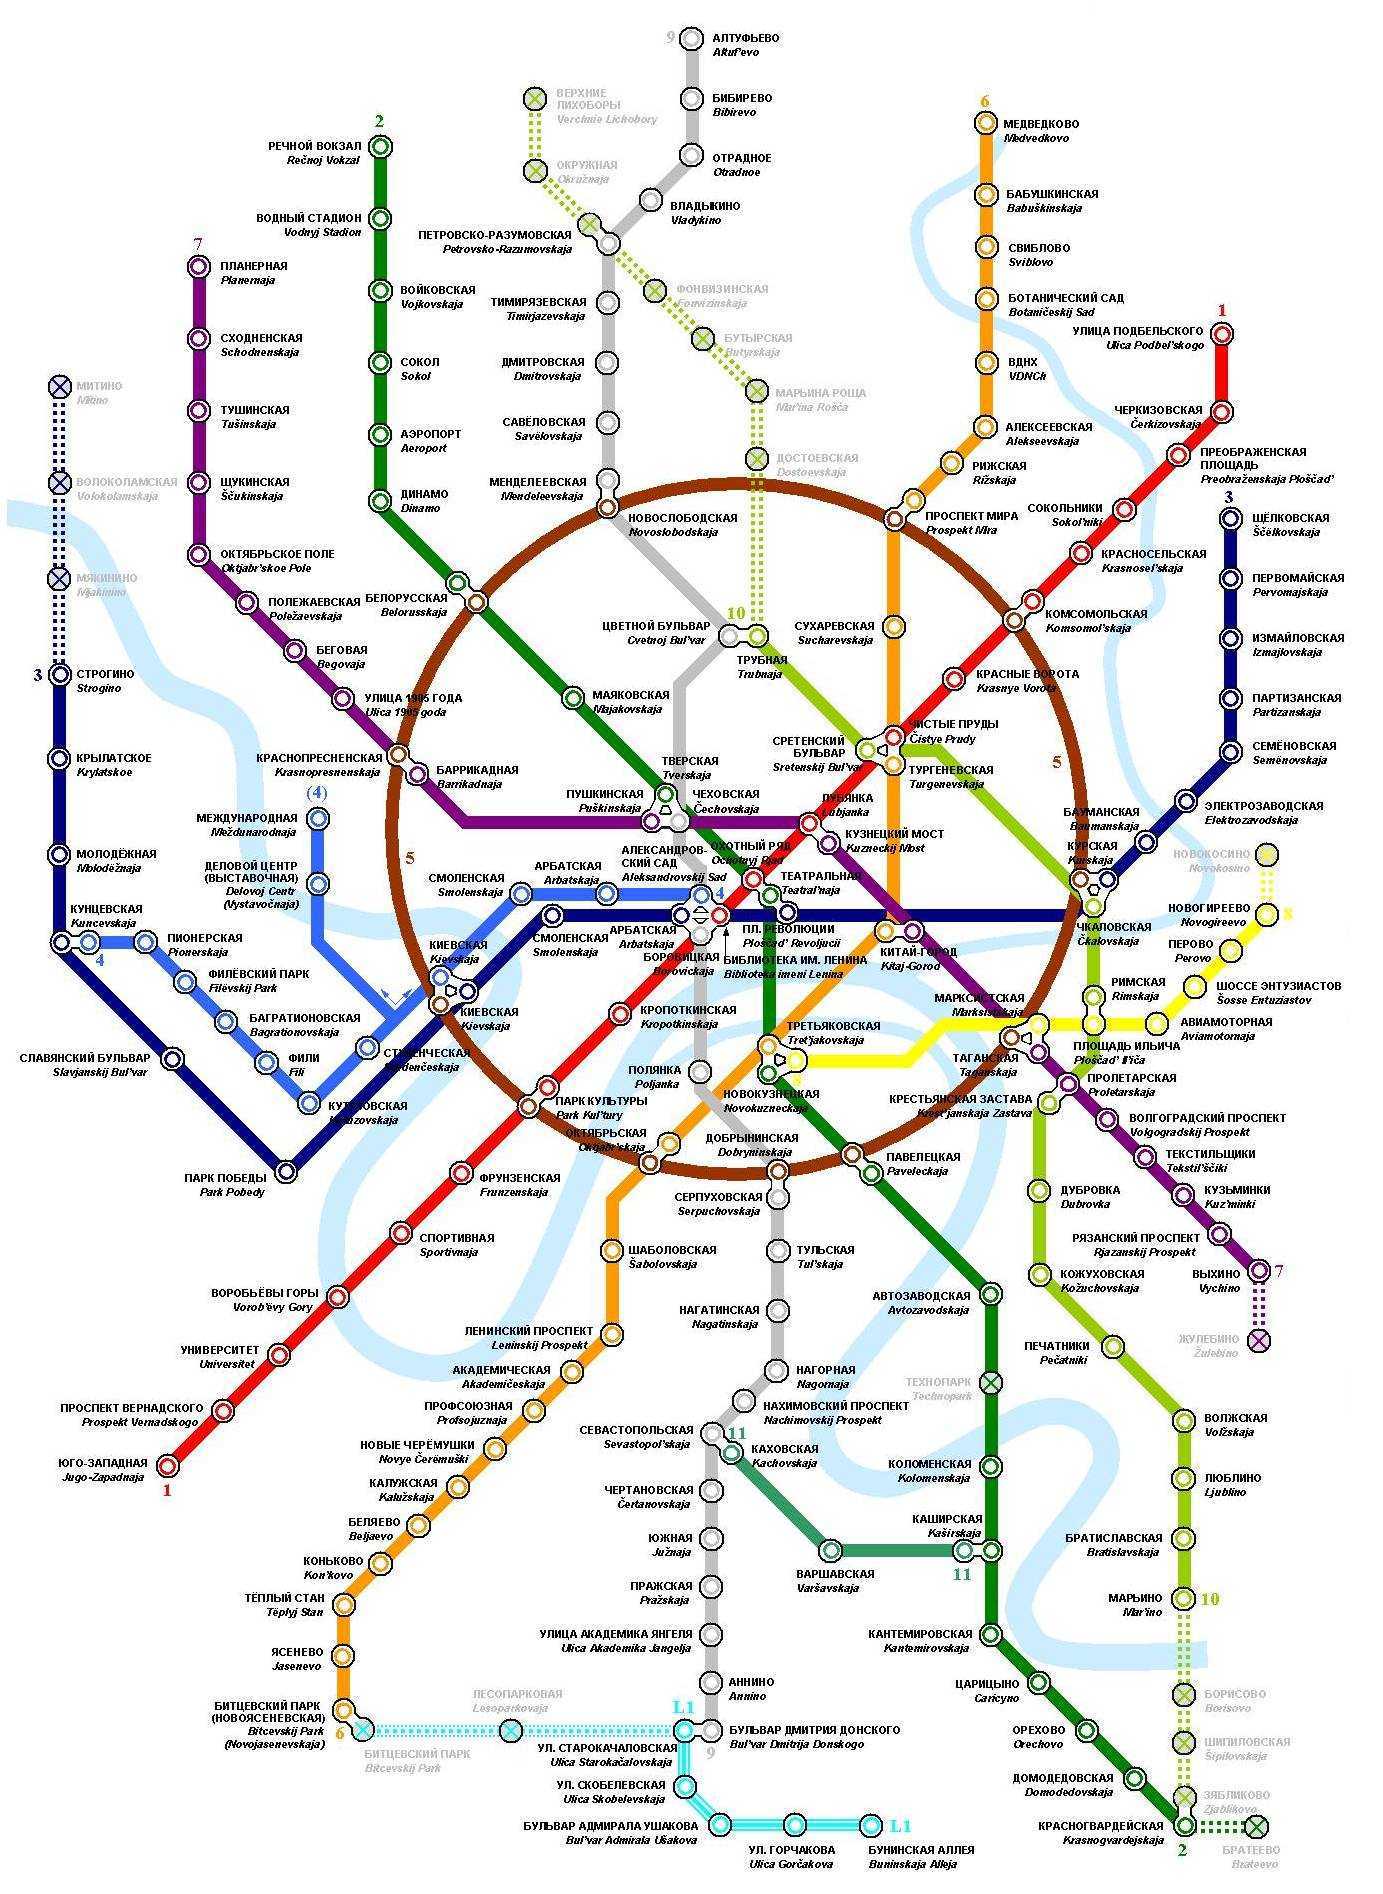 Moskova Metrosu